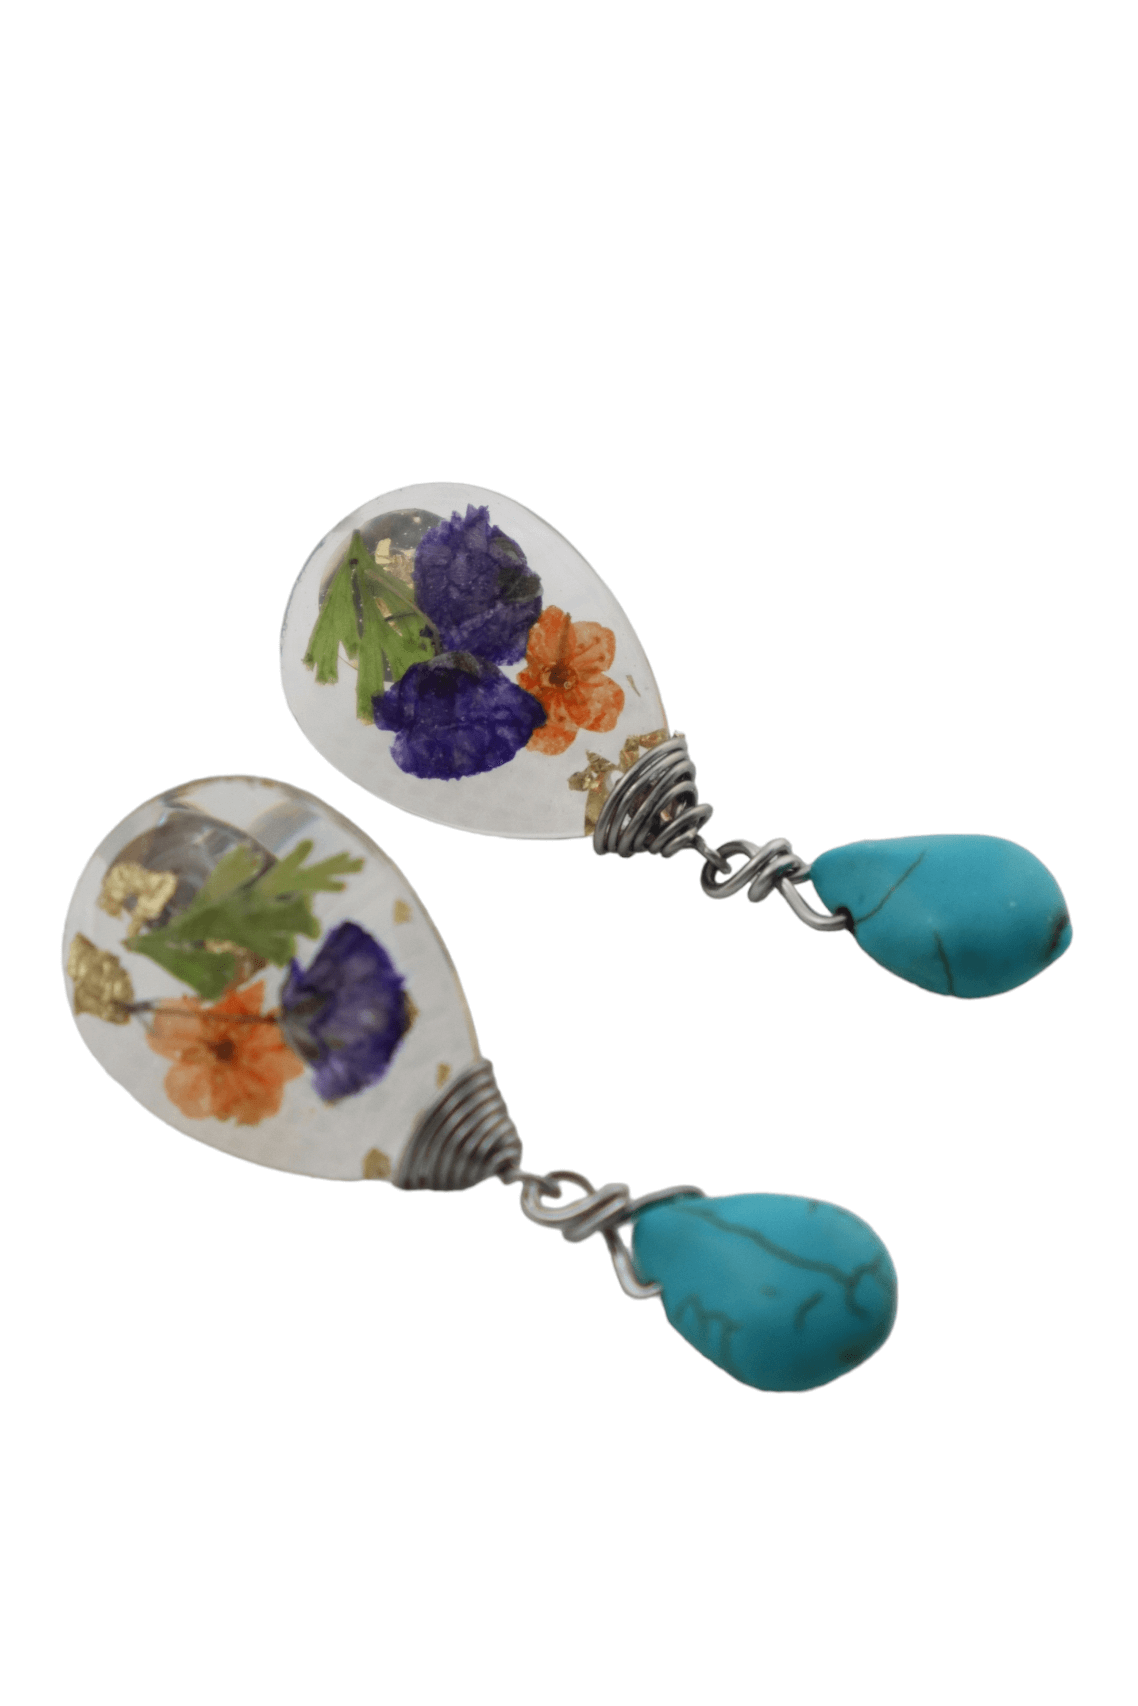 Flower-jewelry---turquoise-earrings---resin-flower-earrings---Kaleidoscopes-And-Polka-Dots